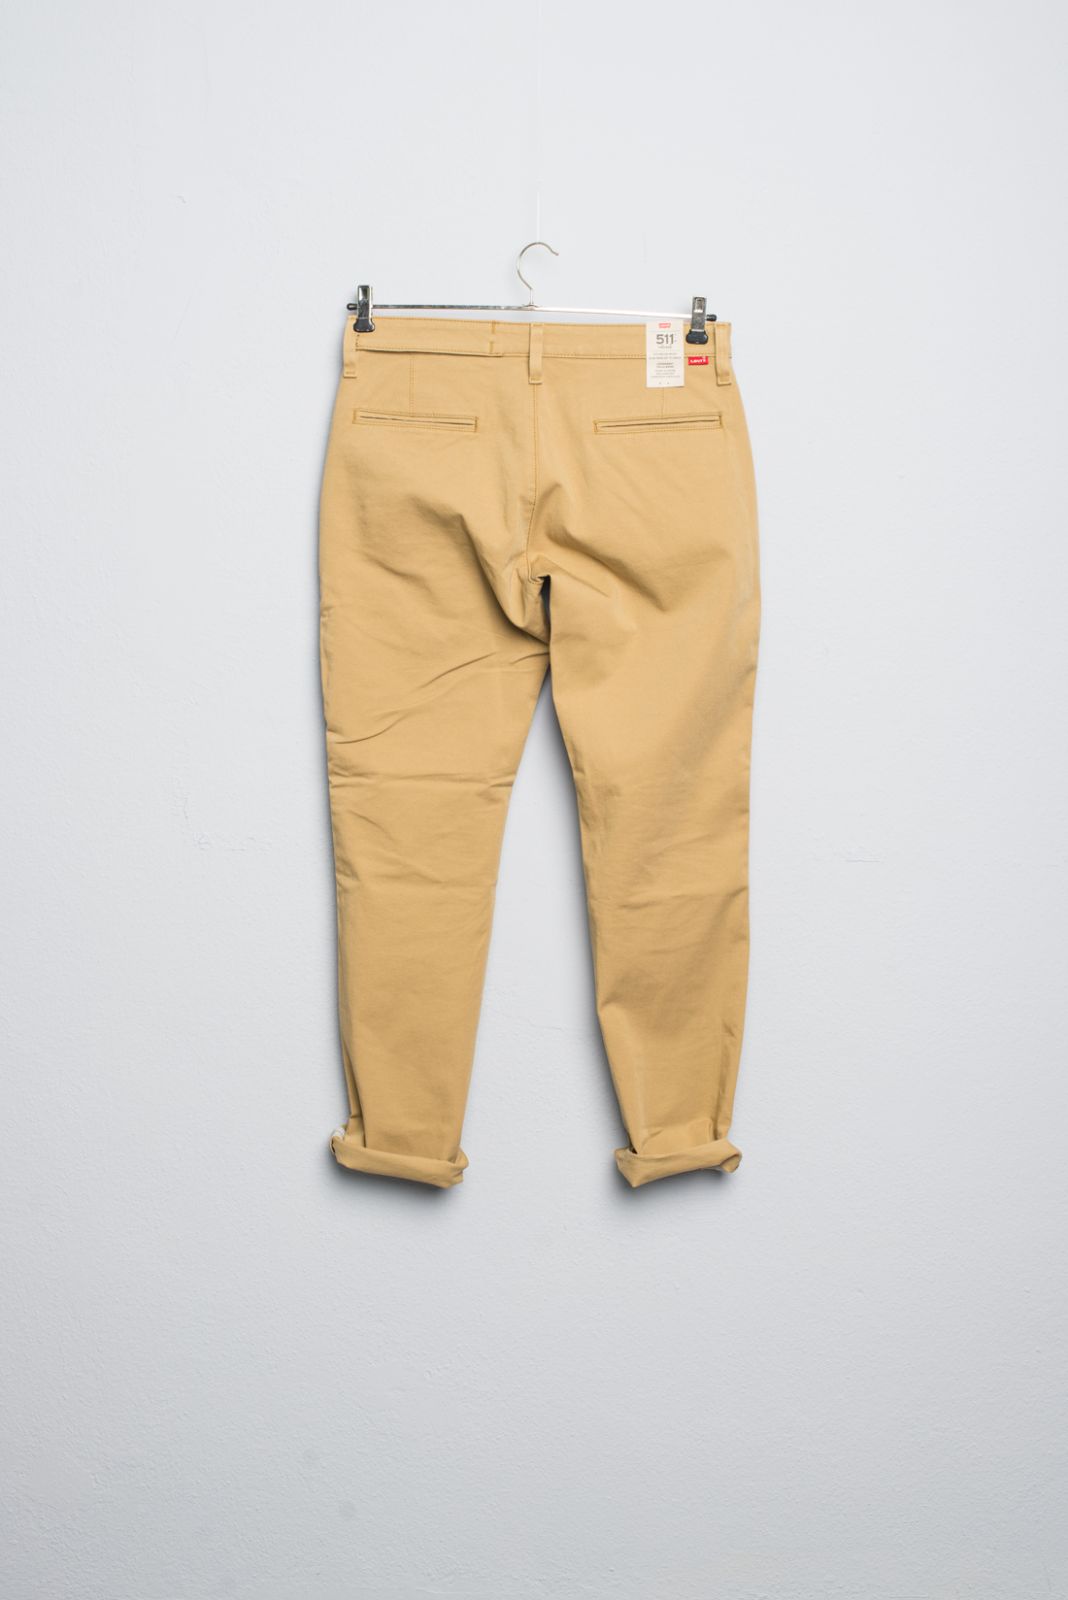 Levi's 511 Slim Fit Jeans Harvest Gold